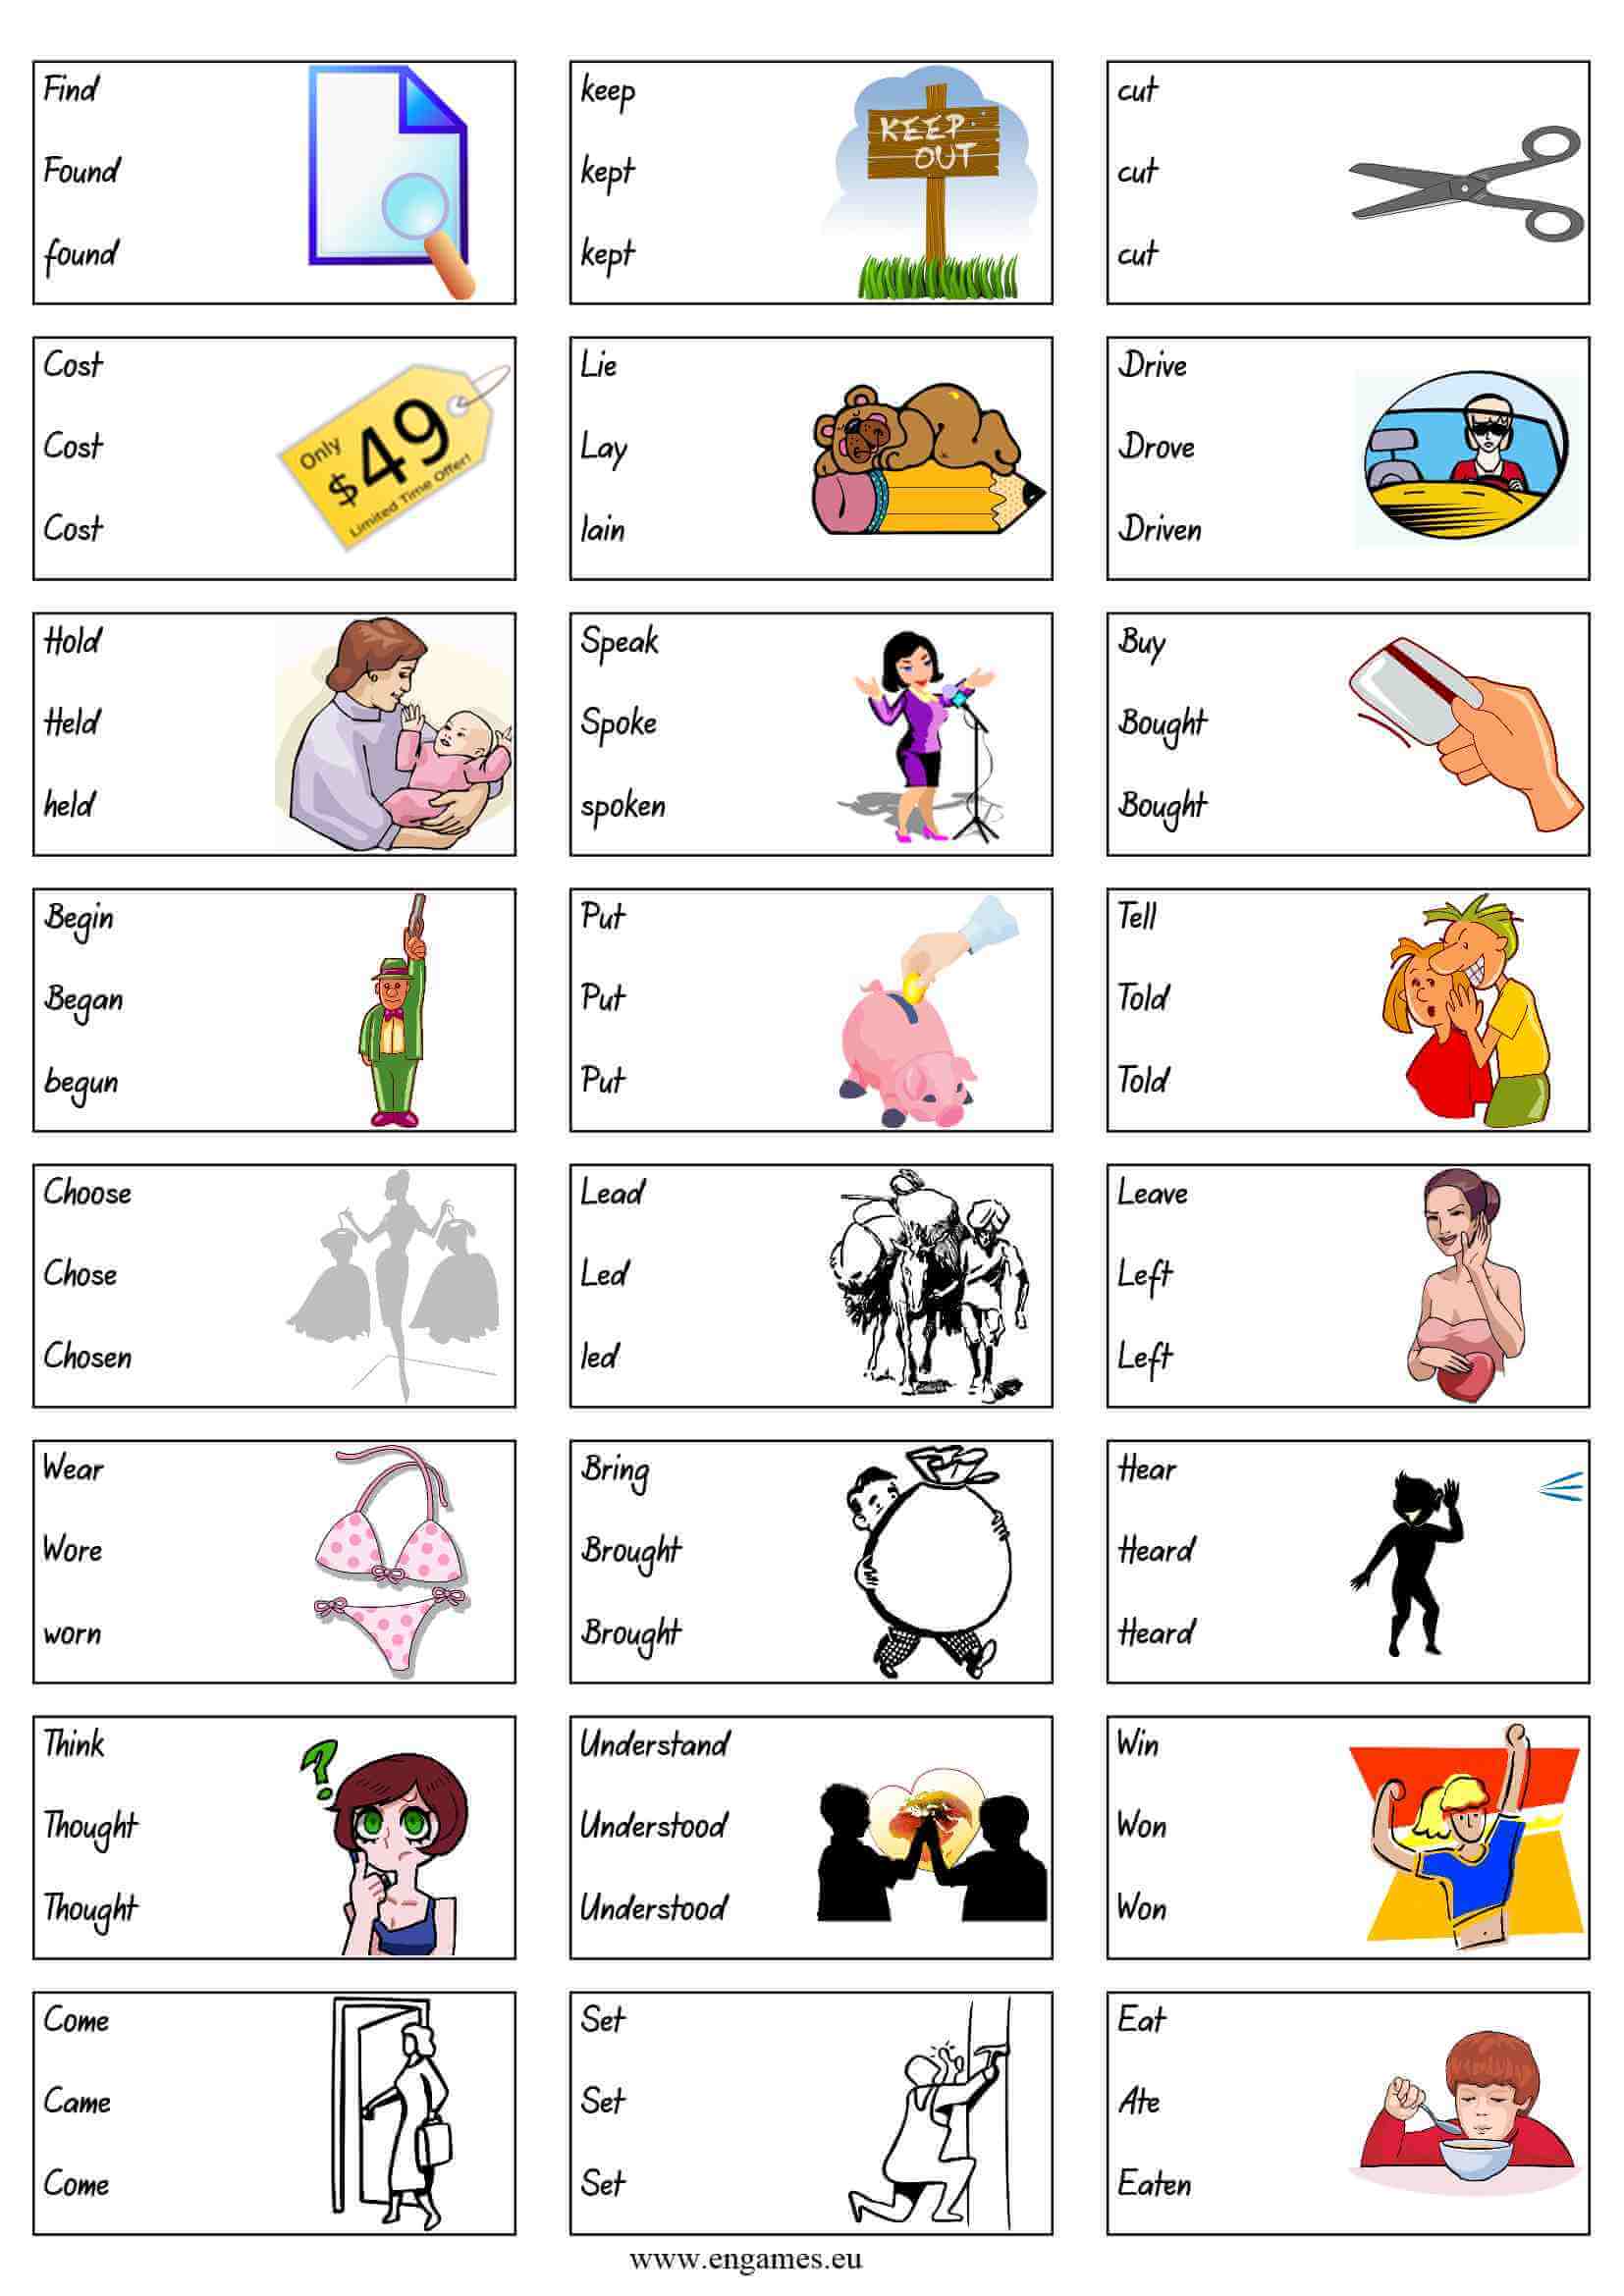 grammar-games-irregular-verbs-games-to-learn-english-games-to-learn-english